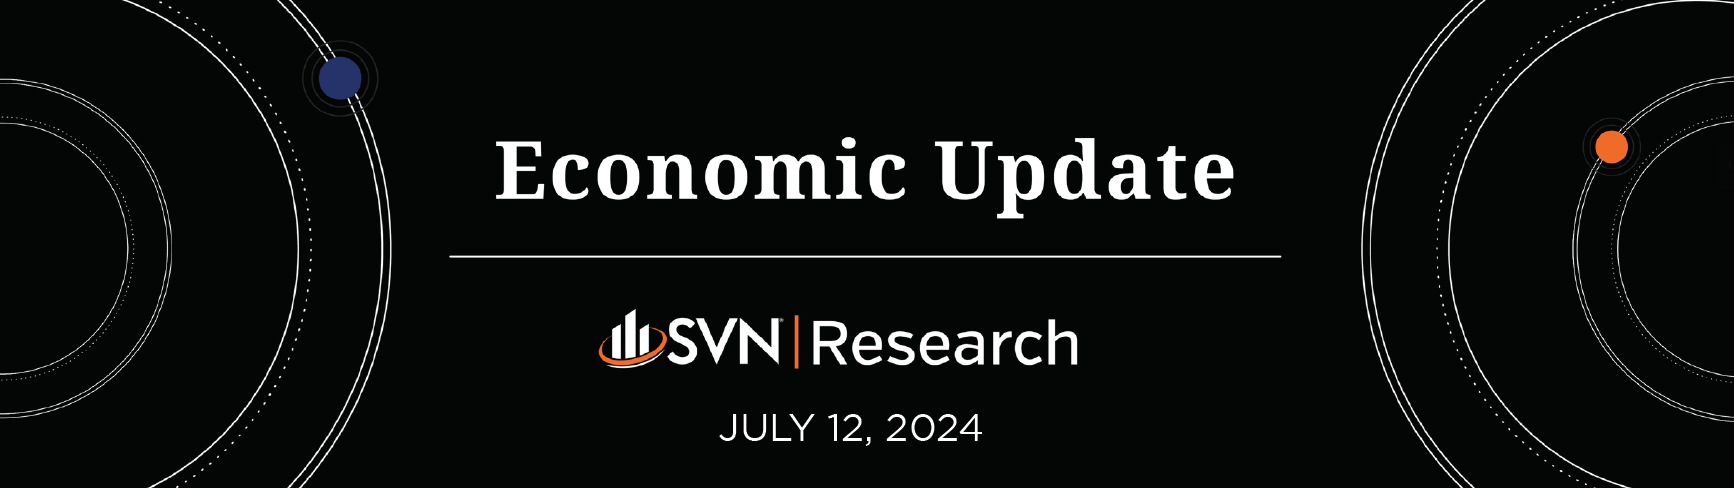 SVN | Research Economic Update 7.12.2024